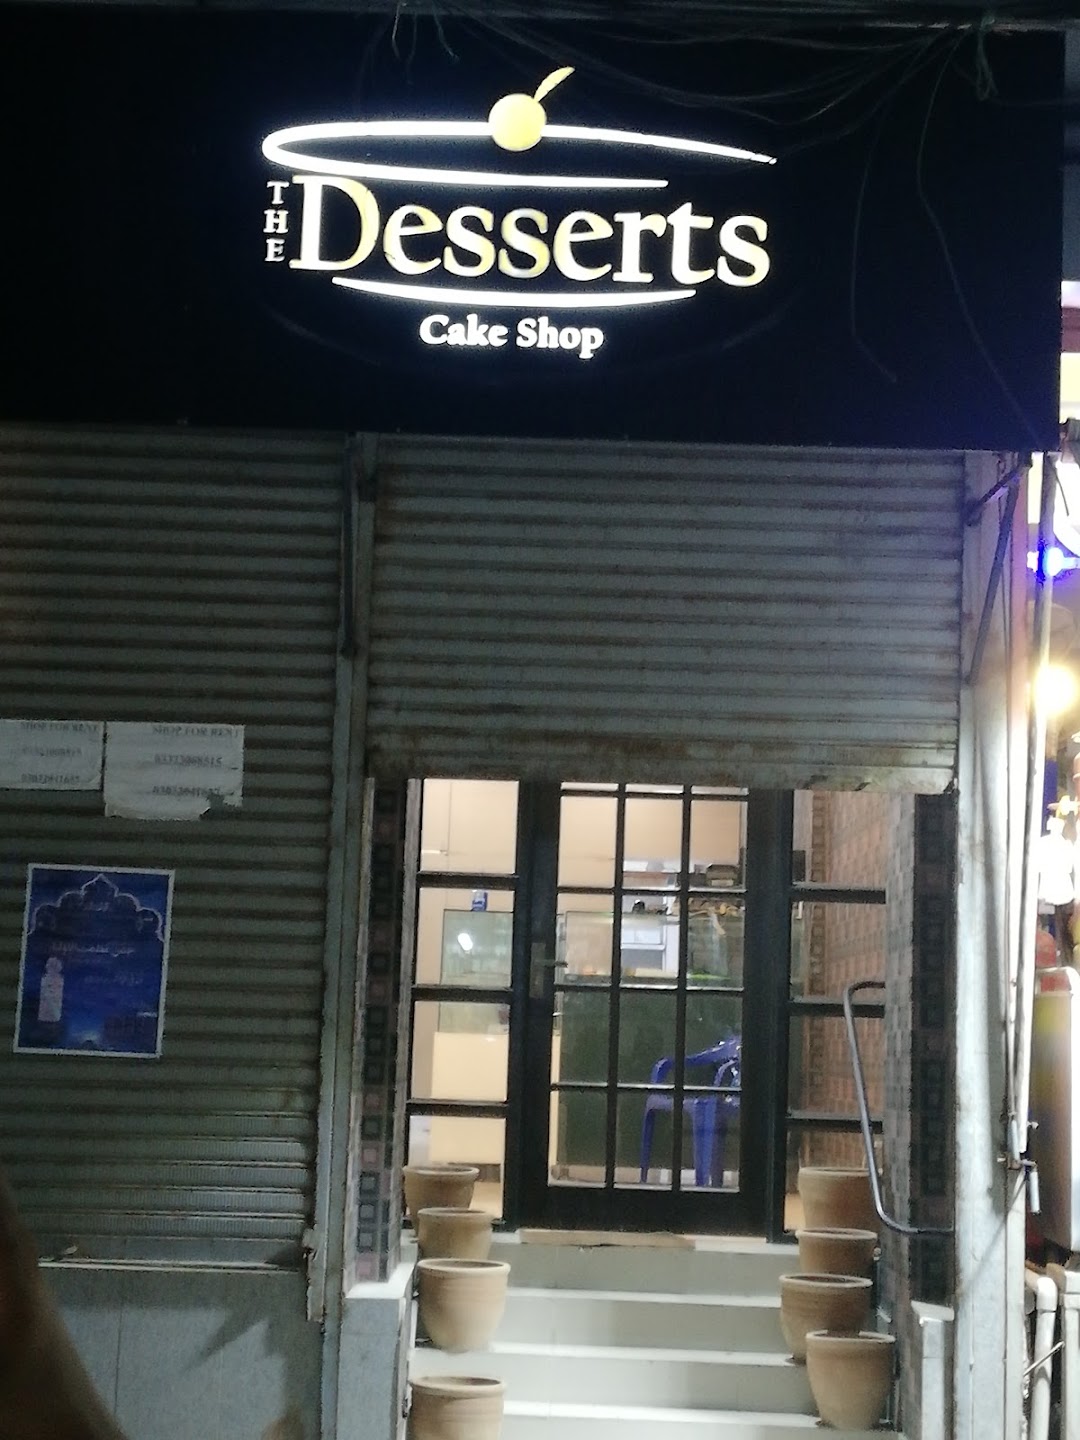 The Desserts Cake Shop